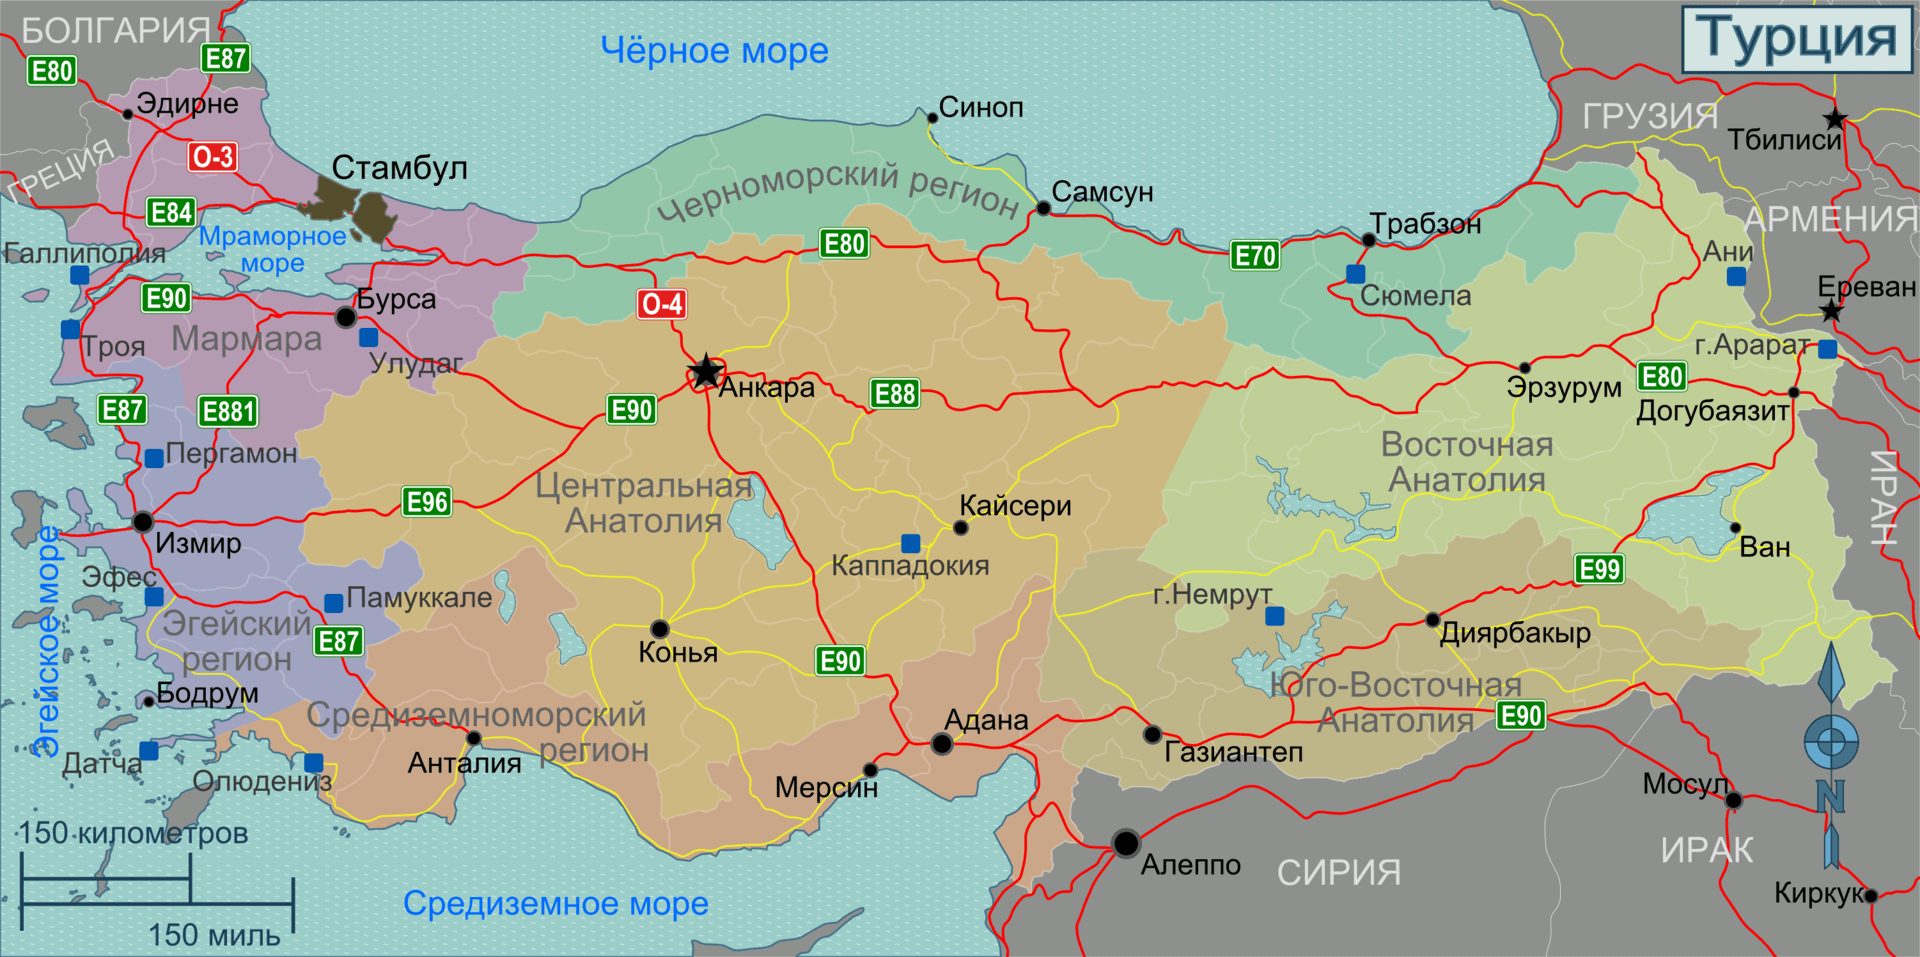 Карта трабзона на русском языке